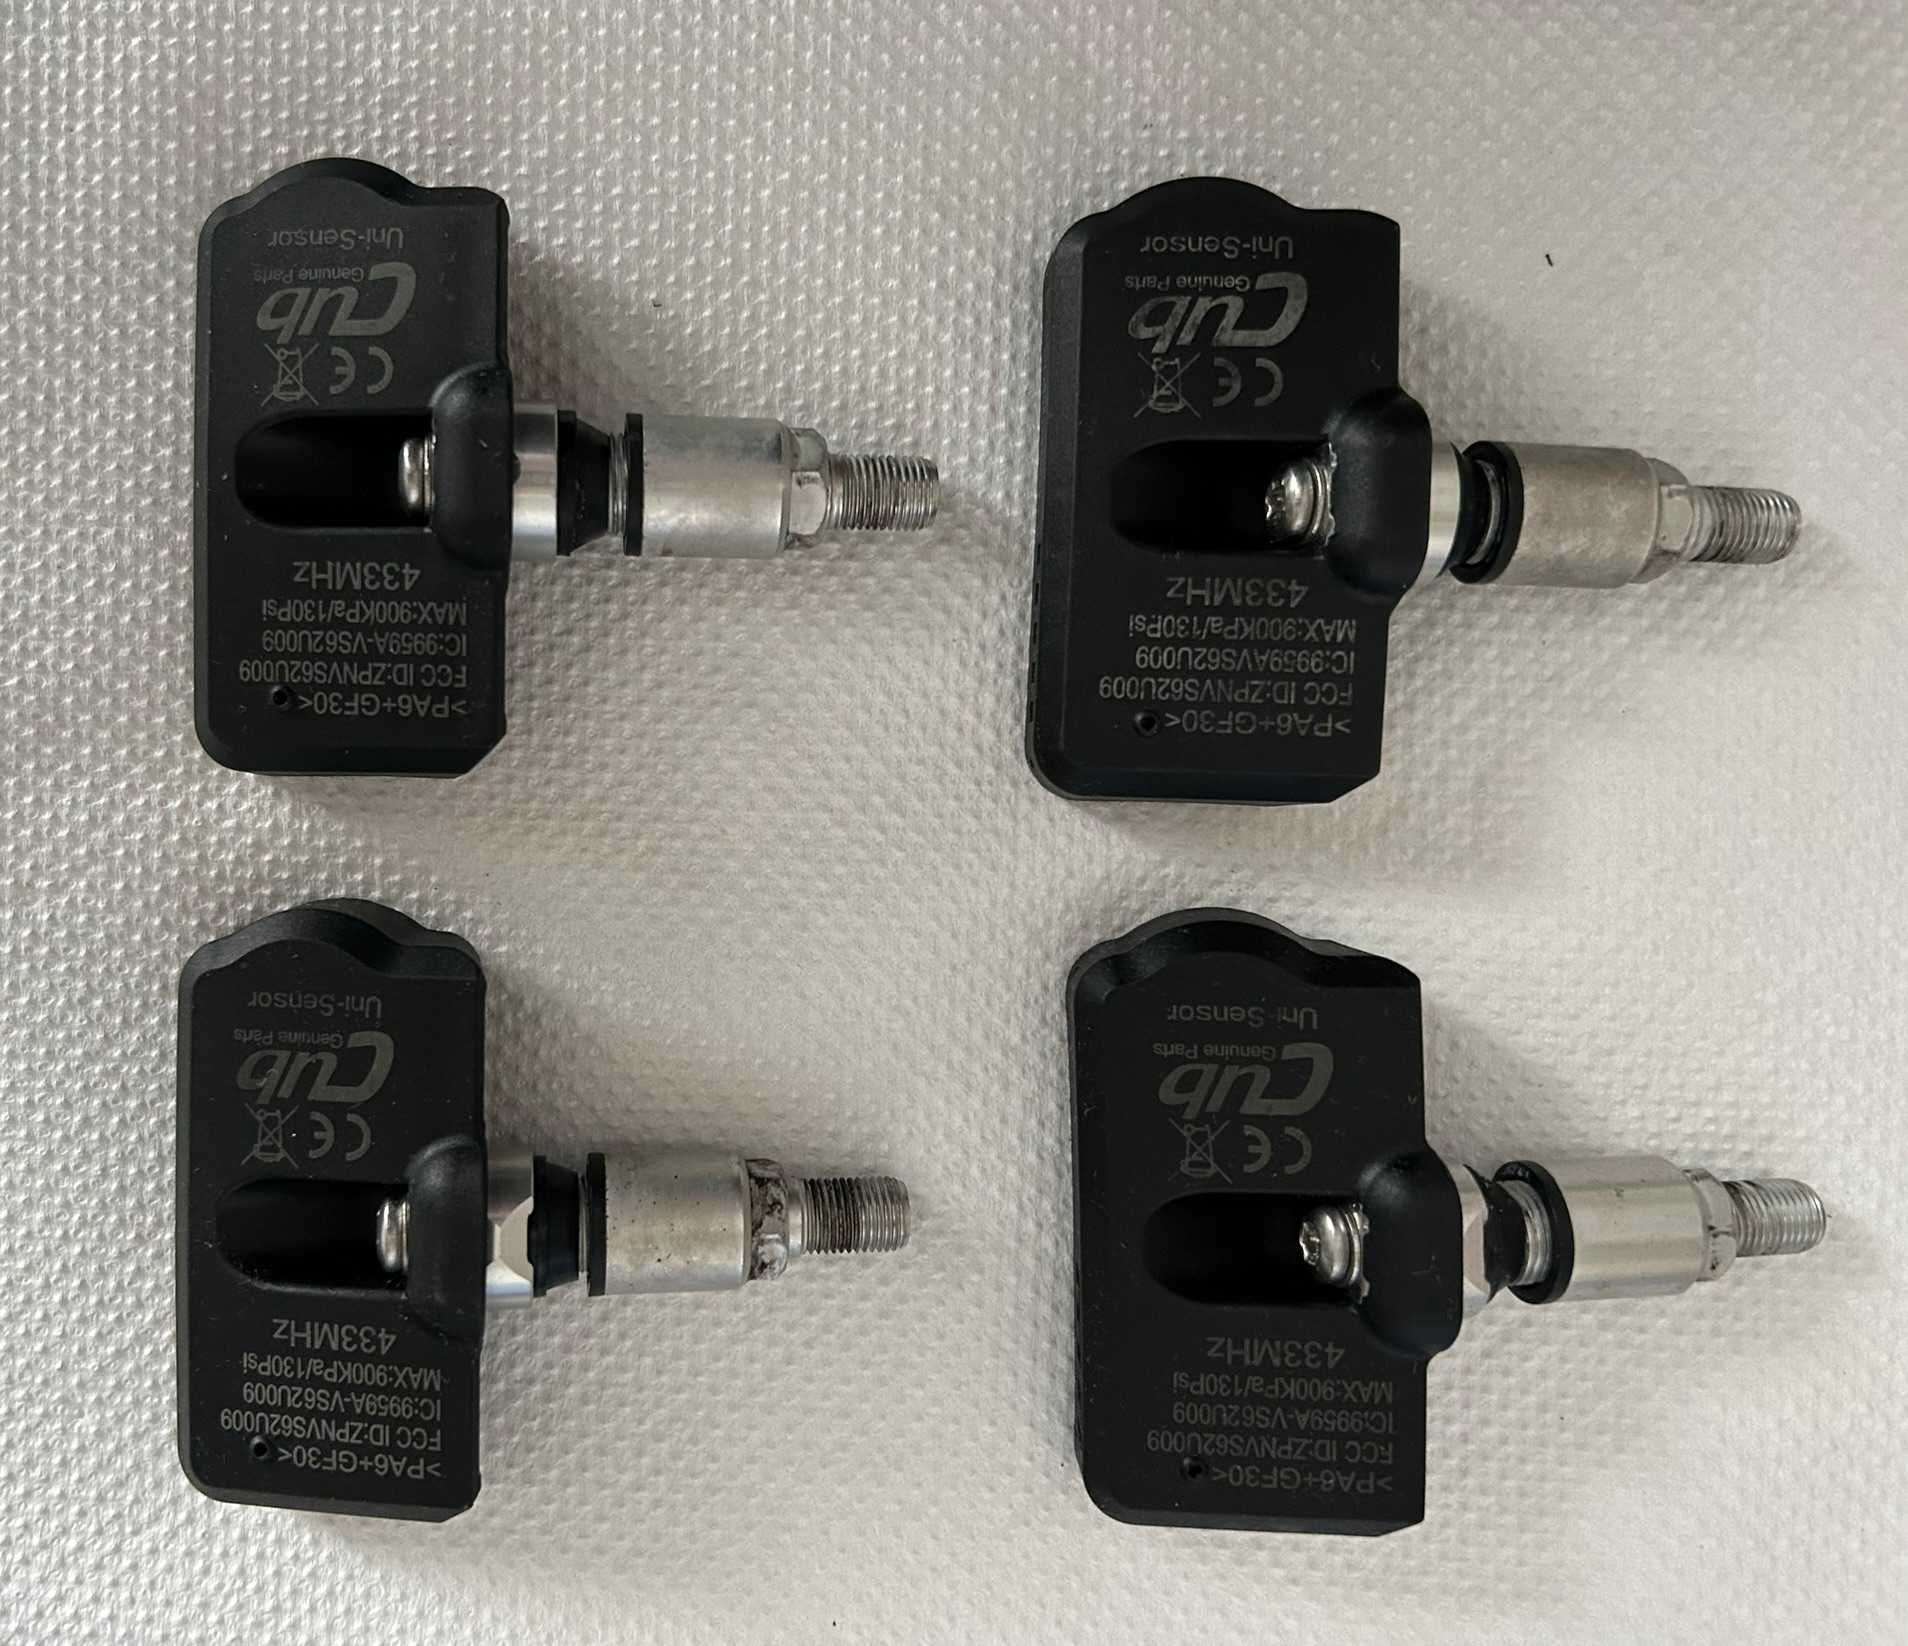 Senzori presiune pneuri - 9959A-VS62U009 - 433 MHz - multimarca